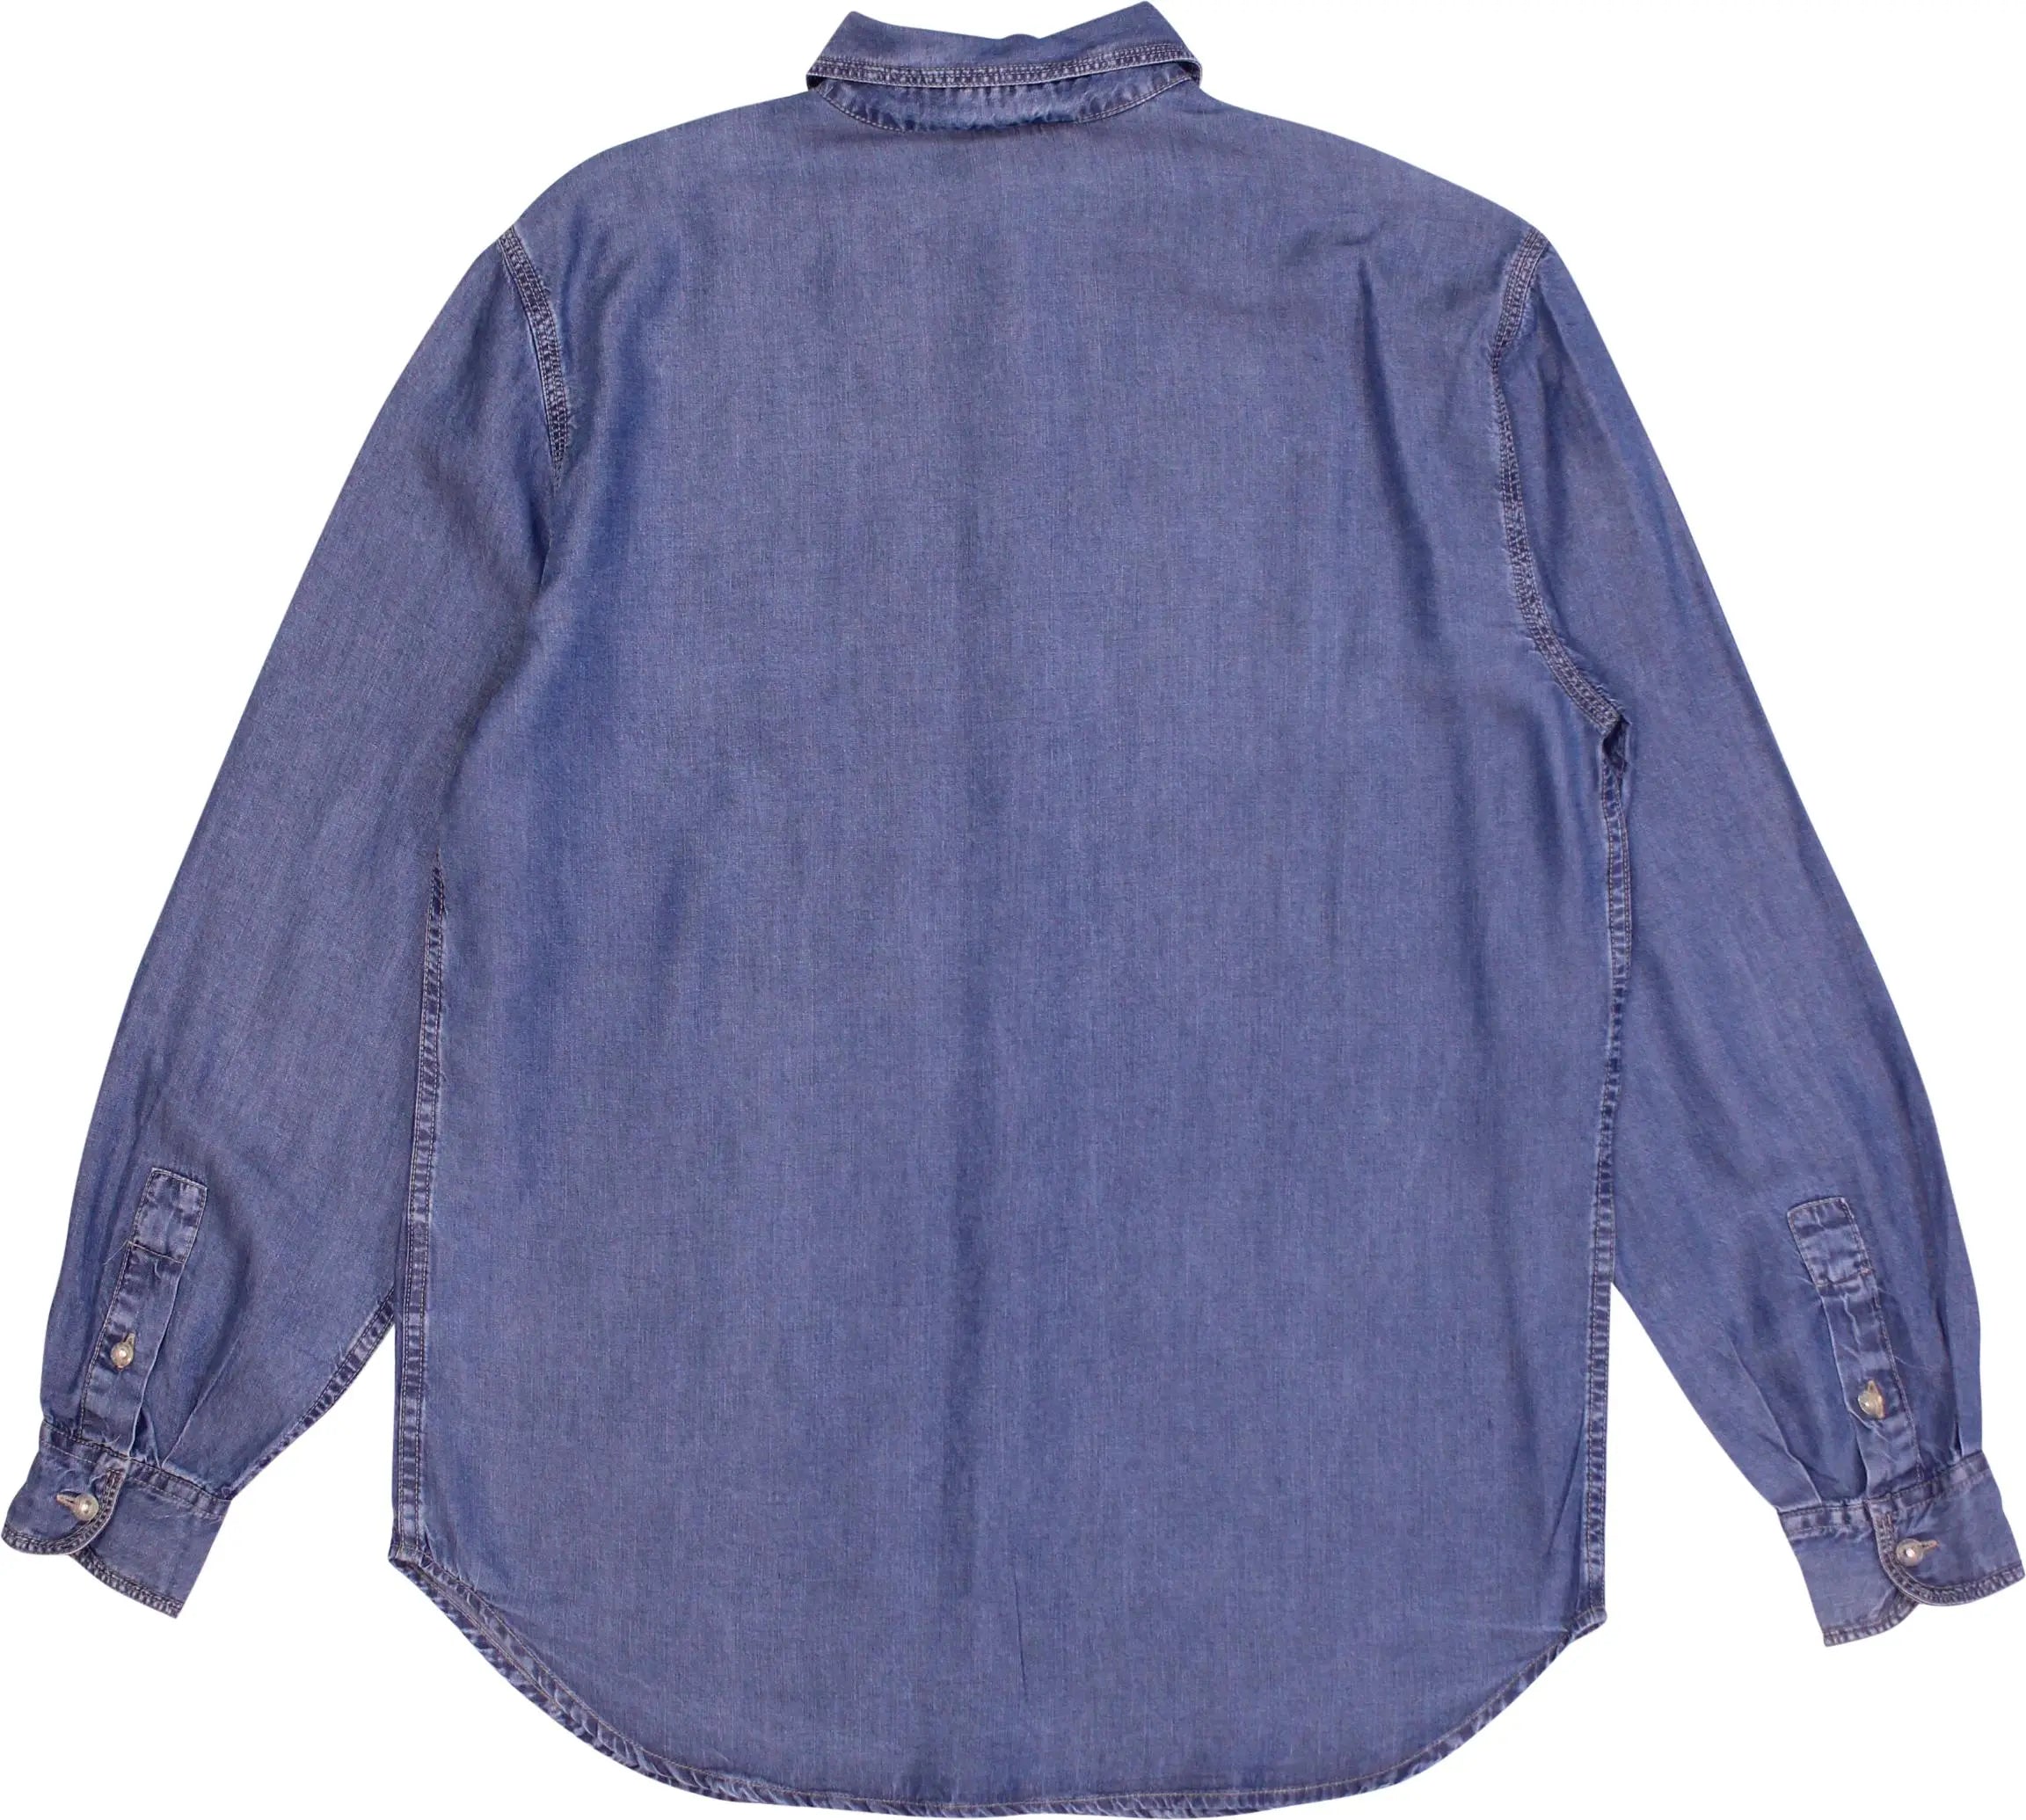 Les Copains - Denim Shirt by Les Copains- ThriftTale.com - Vintage and second handclothing